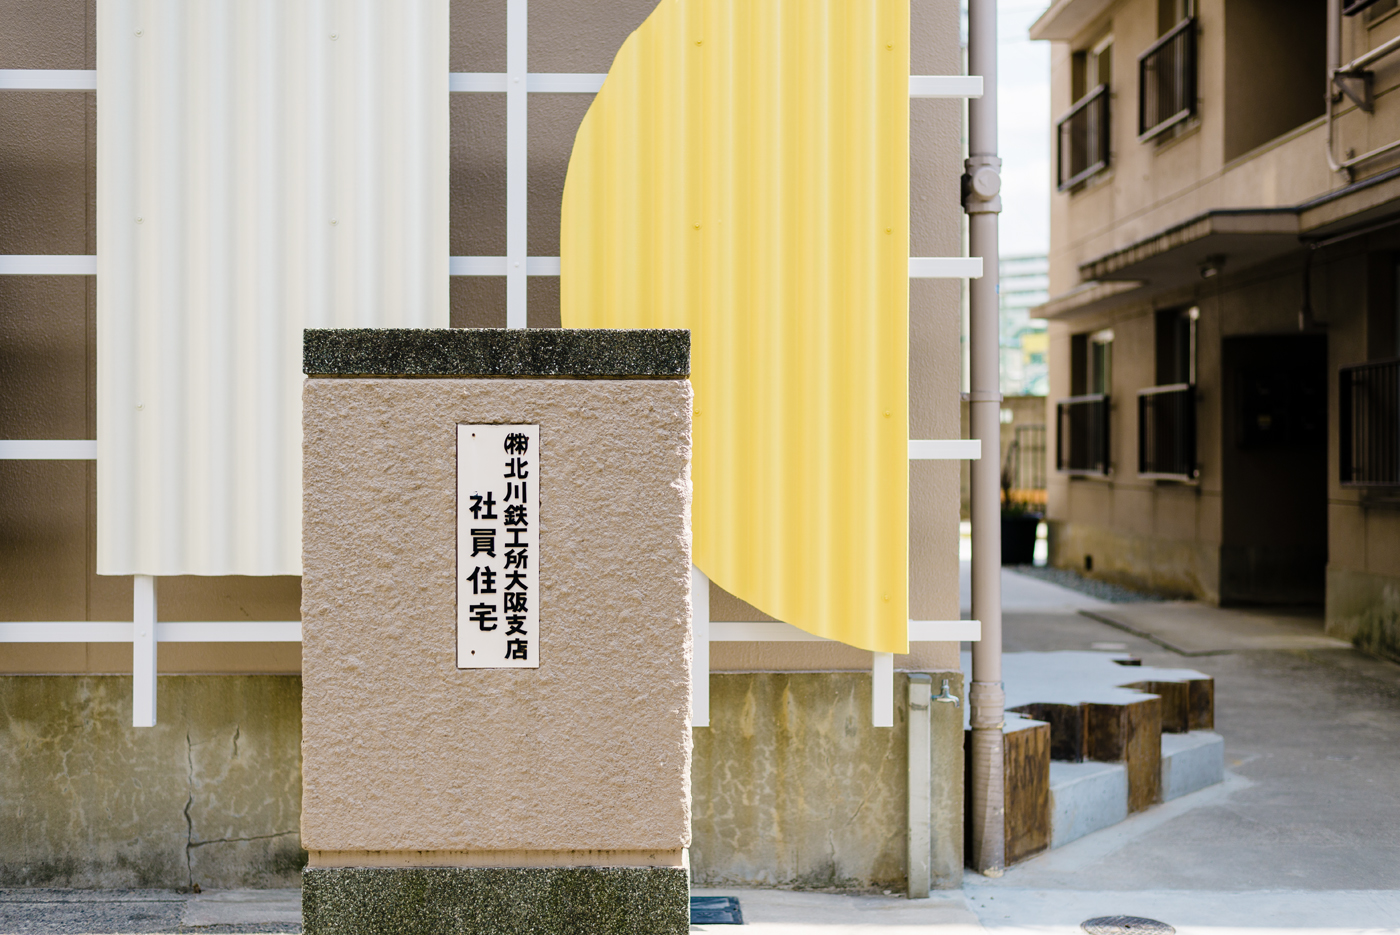 Wordmark, signage and facade by UMA for property development APartMENT in the new creative hub of Osaka's Kitakagaya area